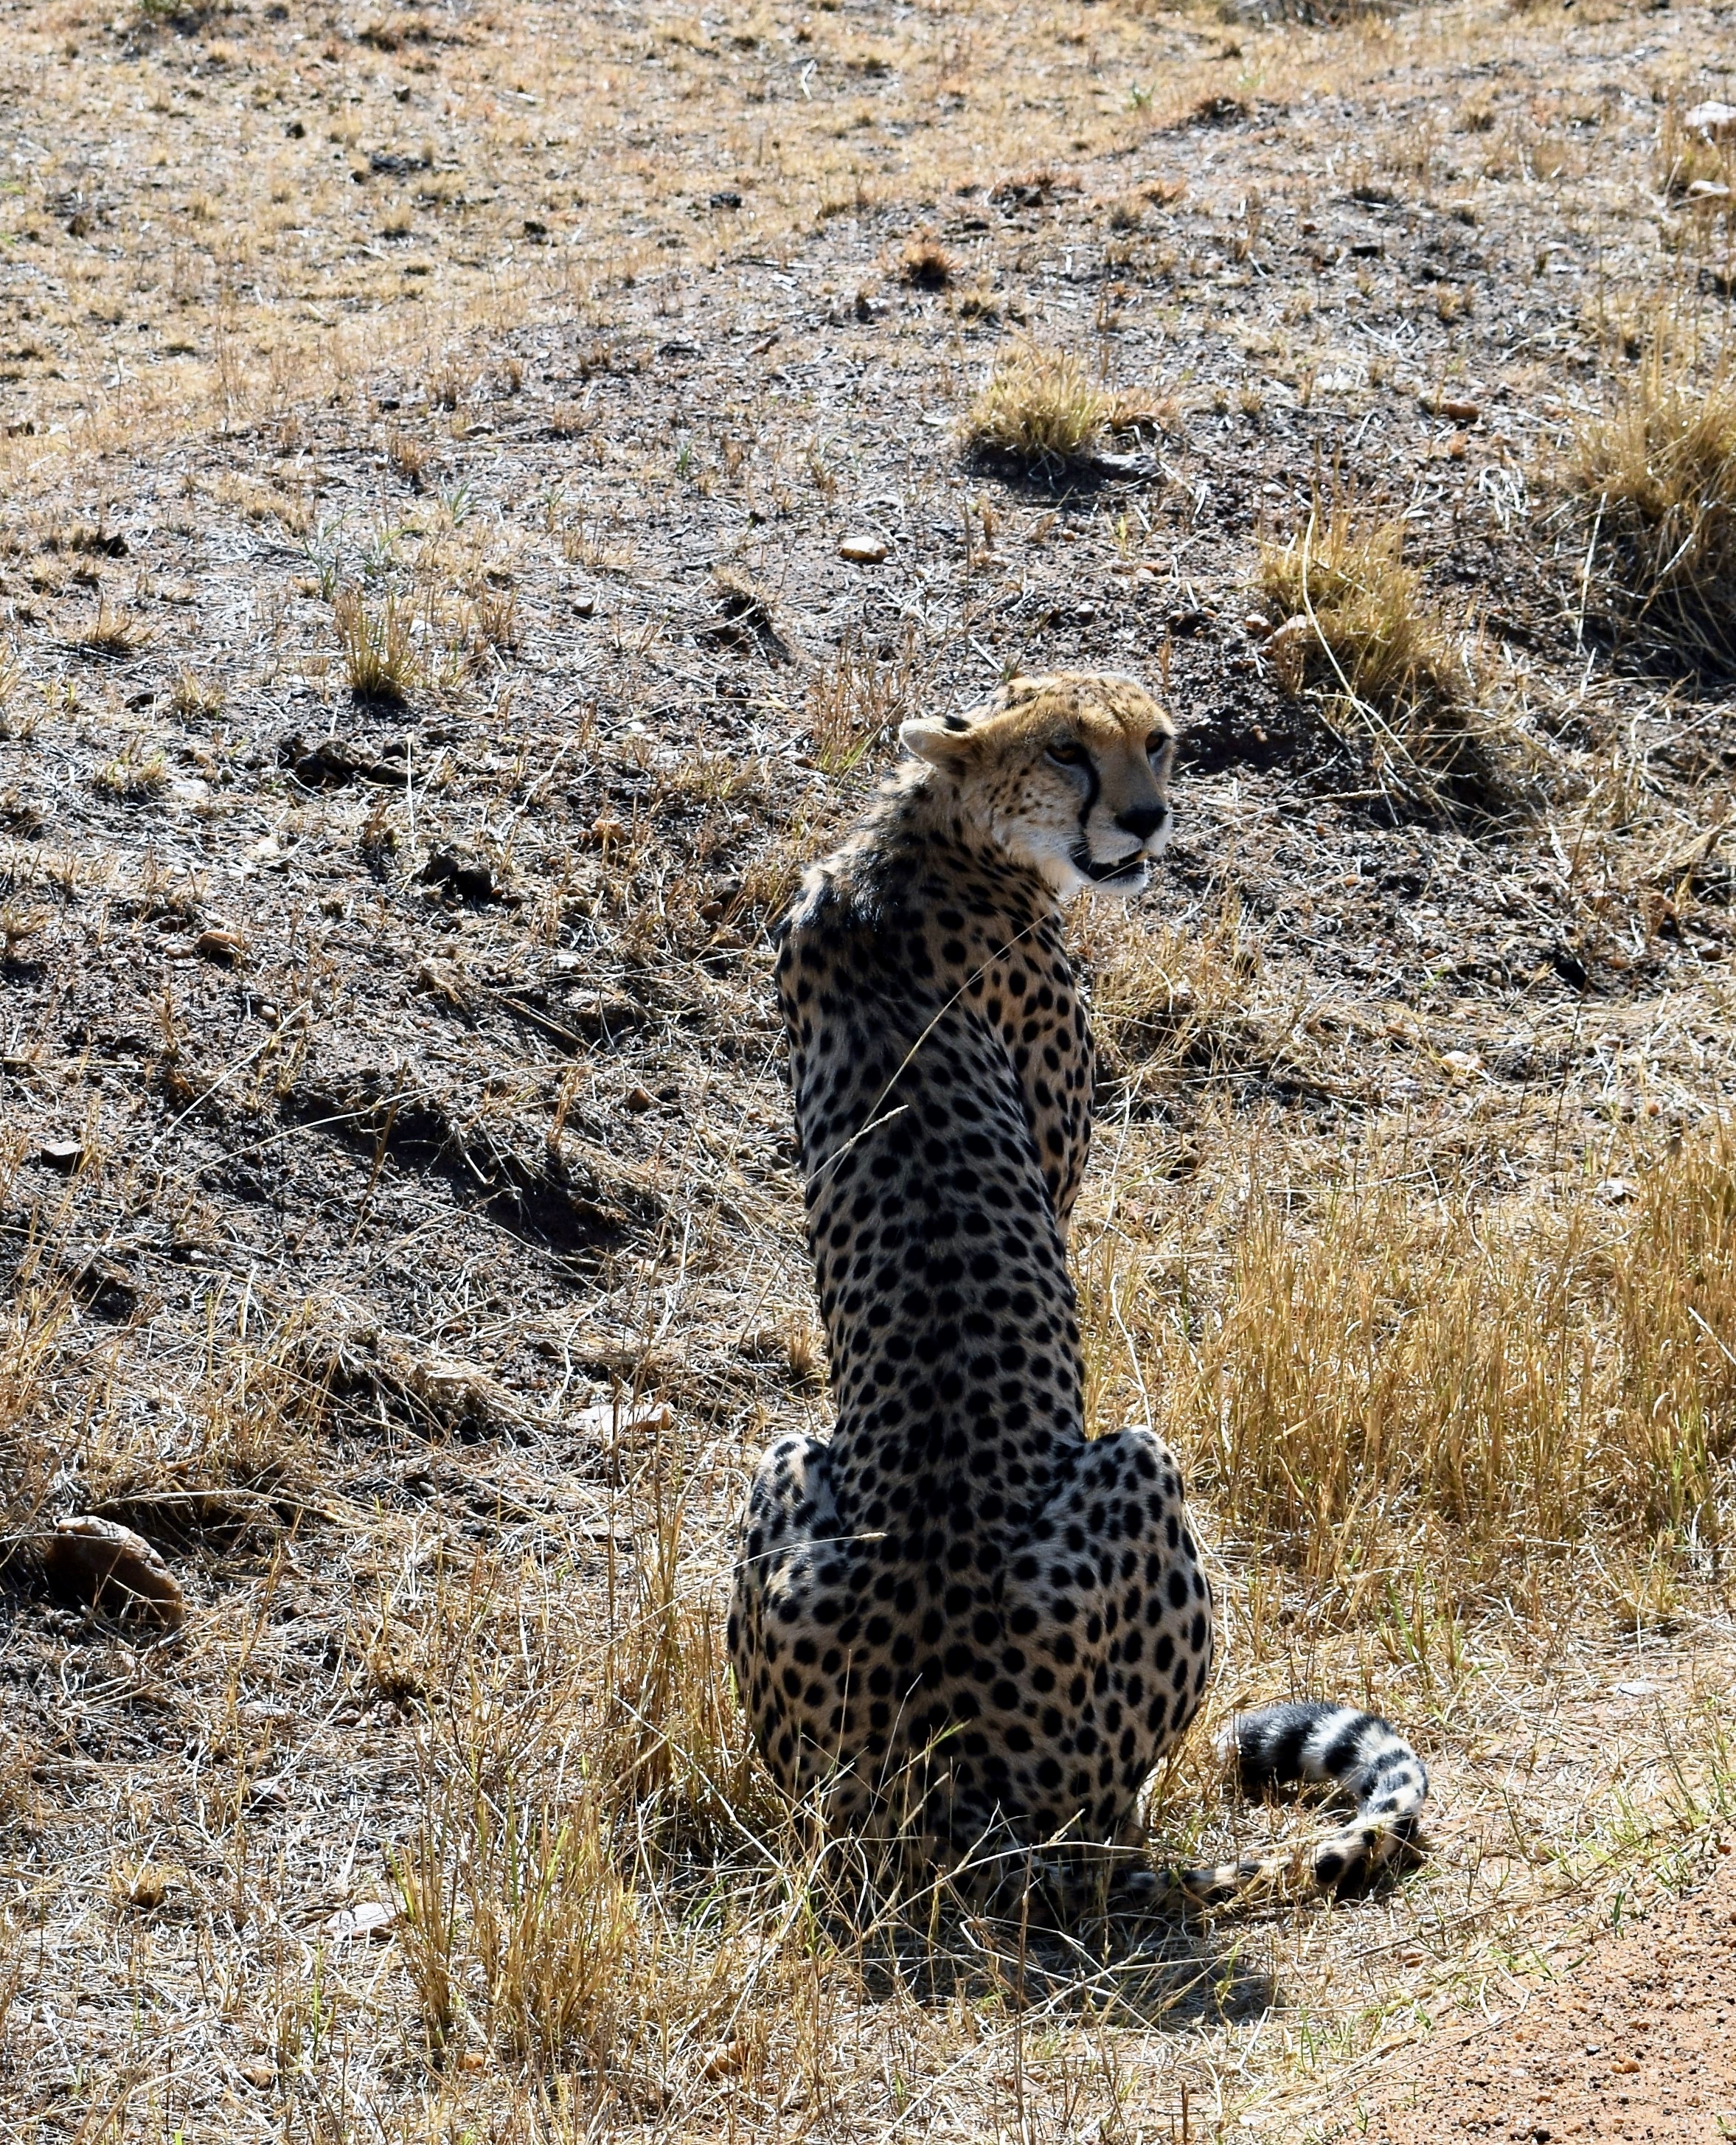 Roadside Cheetah in Masai Mara, Kenya